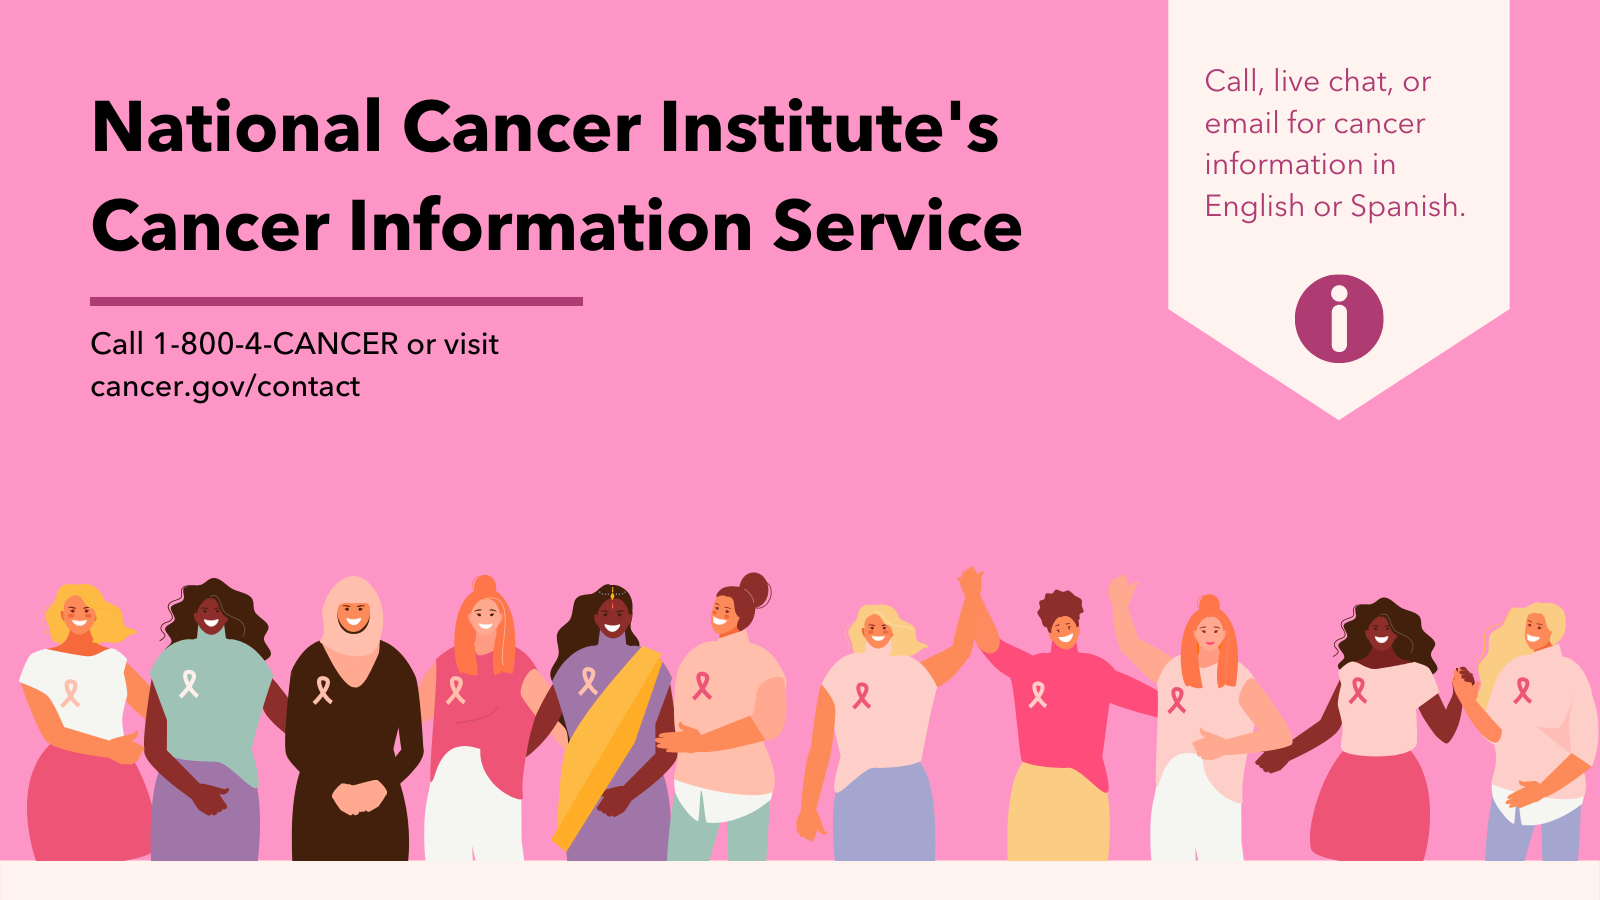 National Cancer Institute's Cancer Information Service